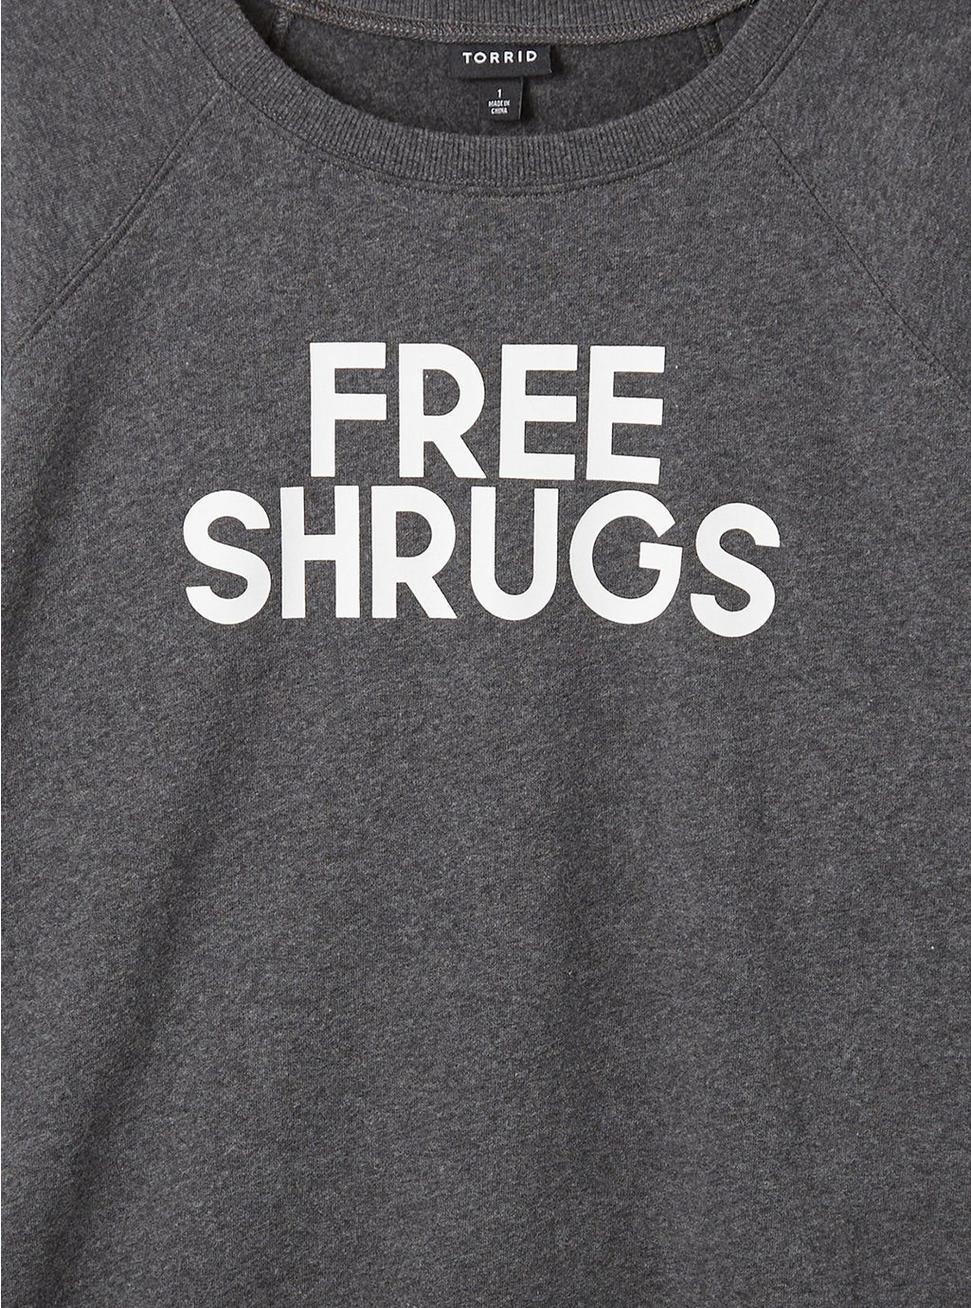 Free Shrugs Cozy Fleece Crew Neck Raglan Sweatshirt, GREY, alternate